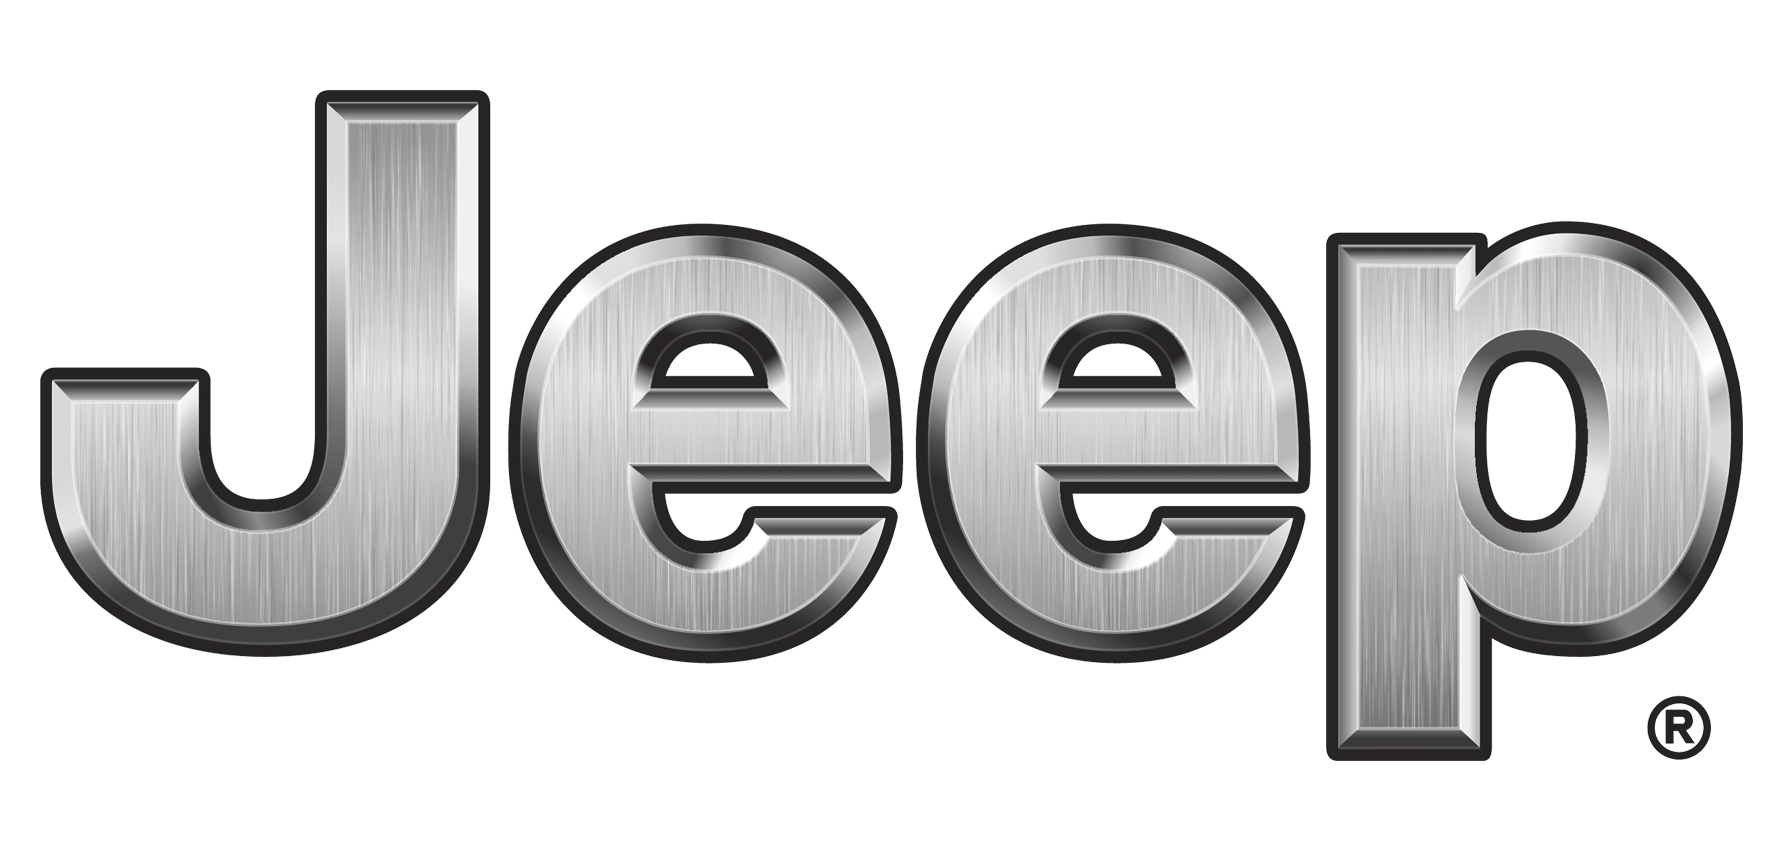 Jeep-Logo